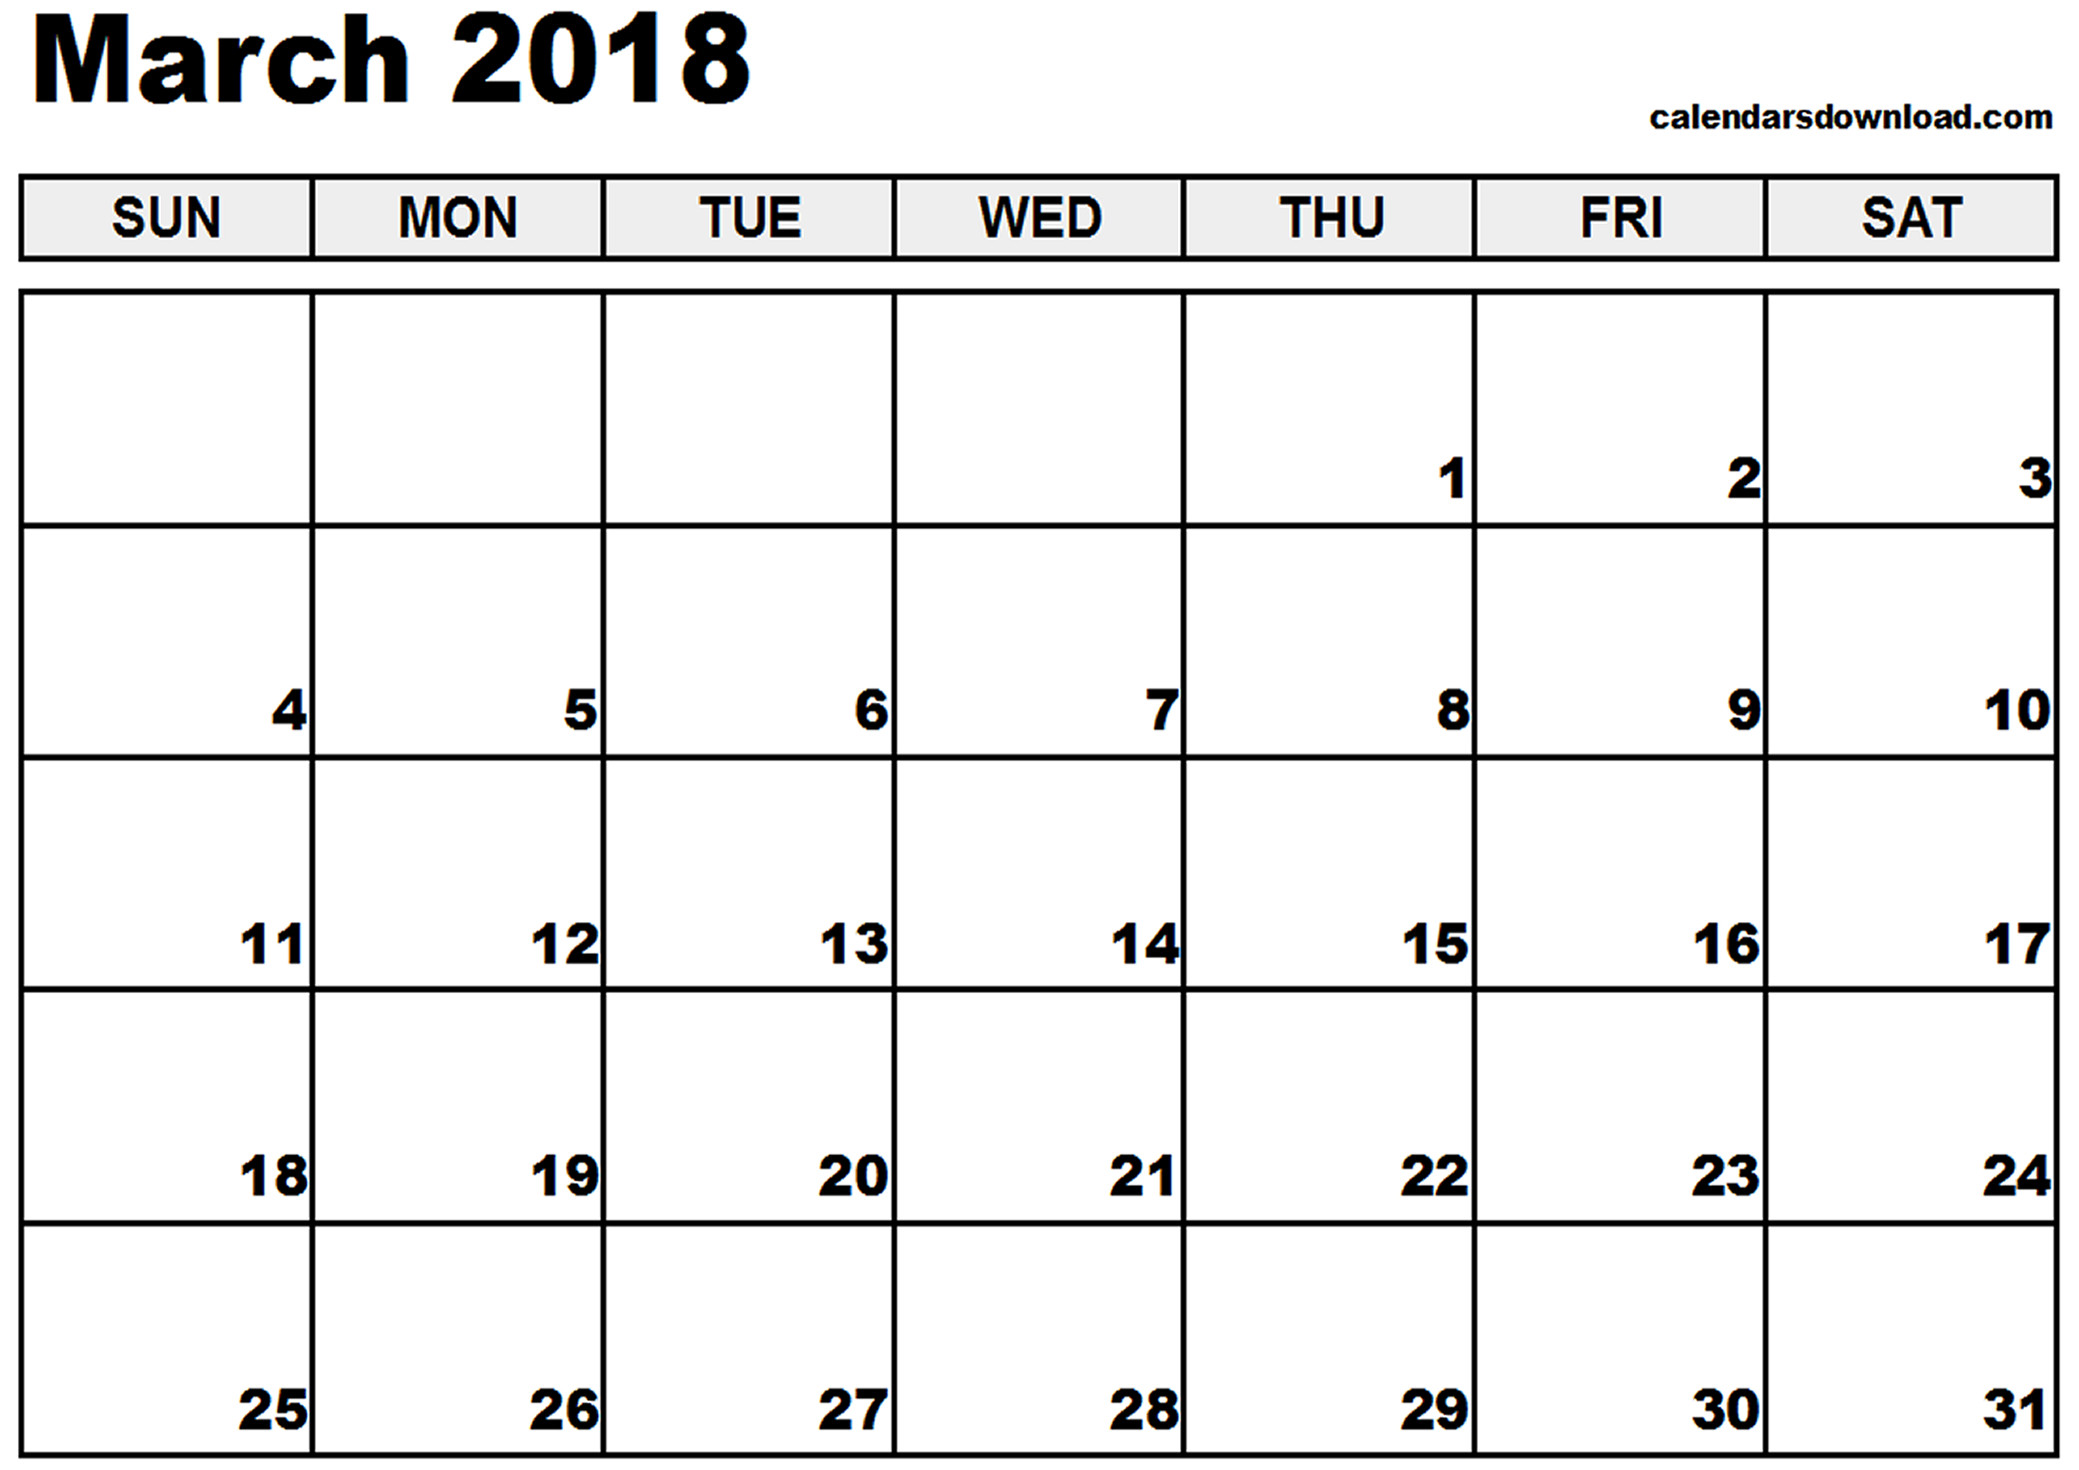 Wallpaper Calendar March 2018 73 images 2079x1470